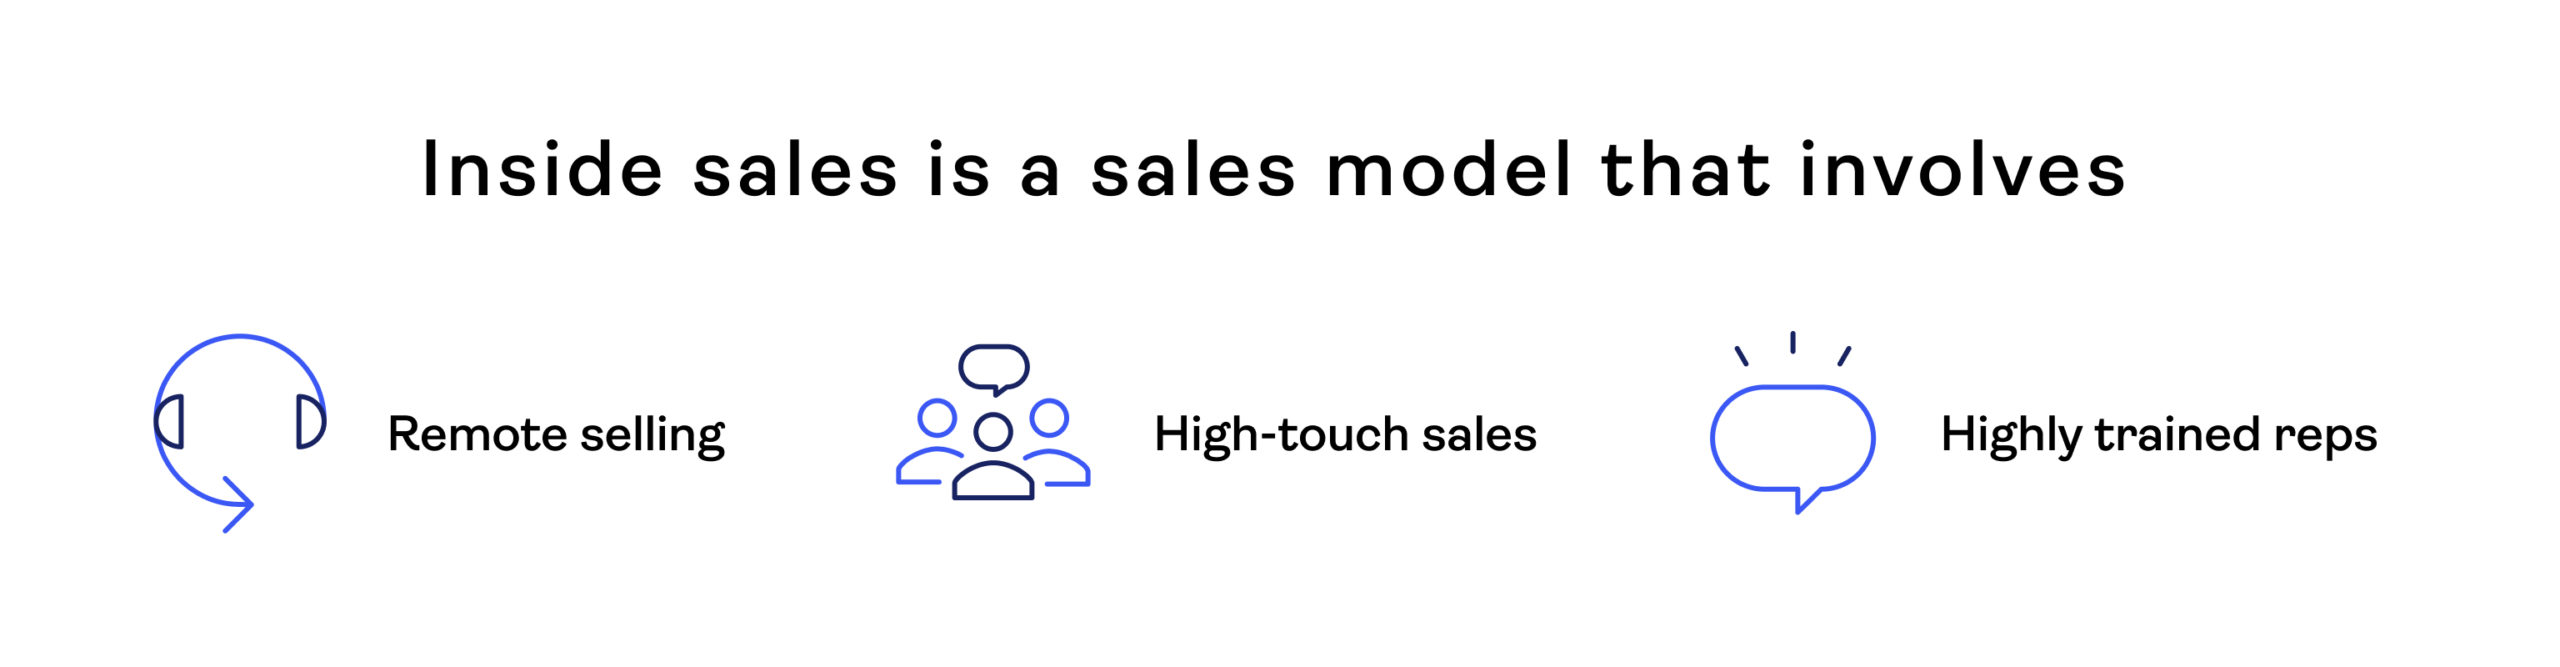 what is inside sales model?